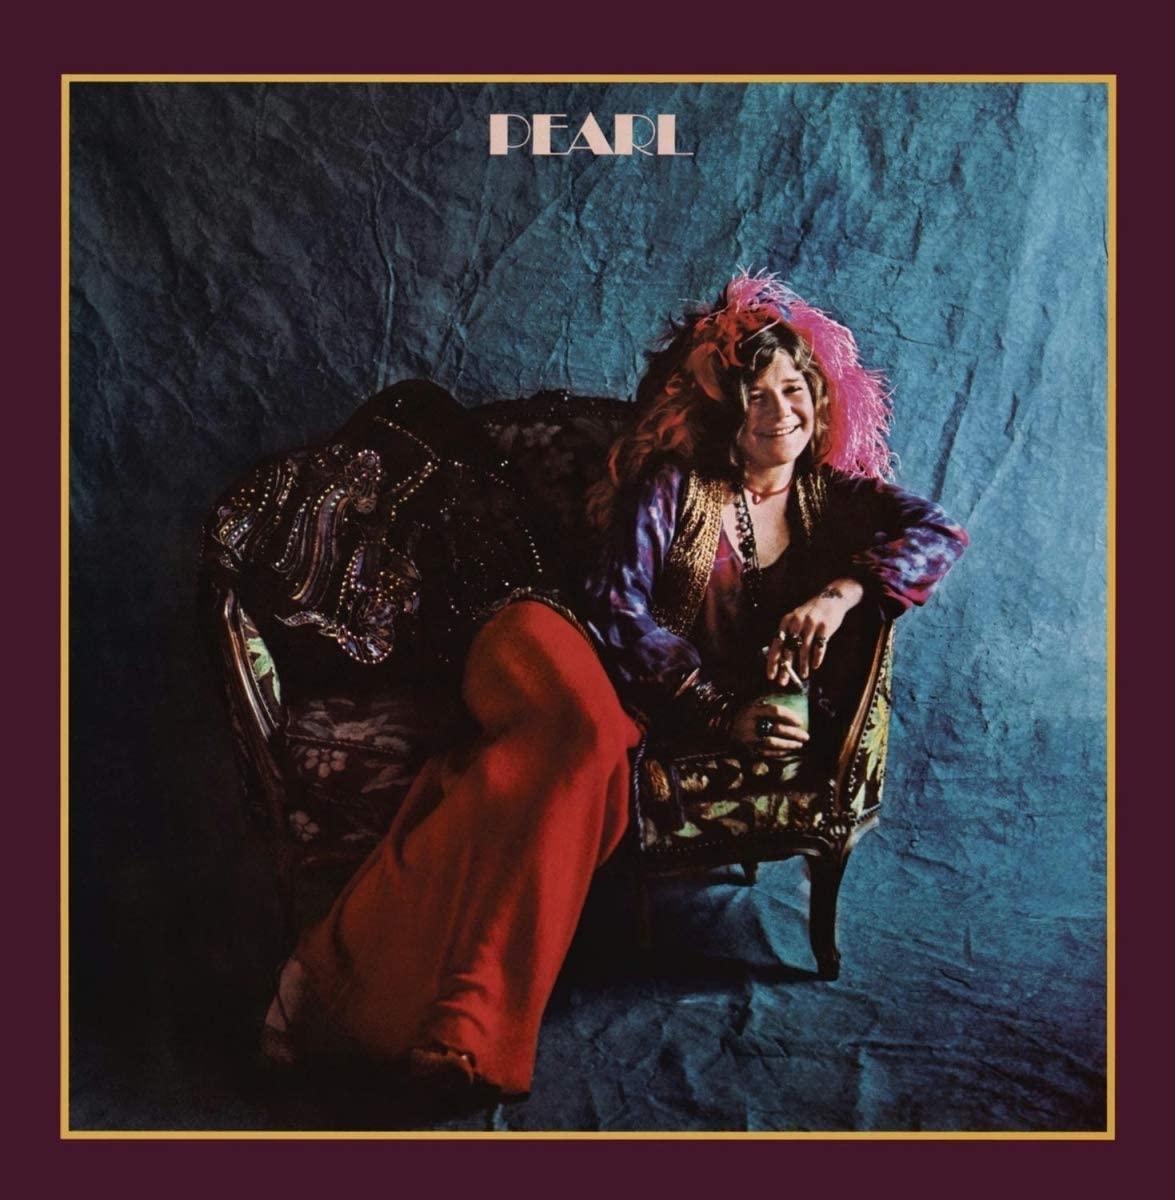 Janis Joplin - Pearl (1971) LP